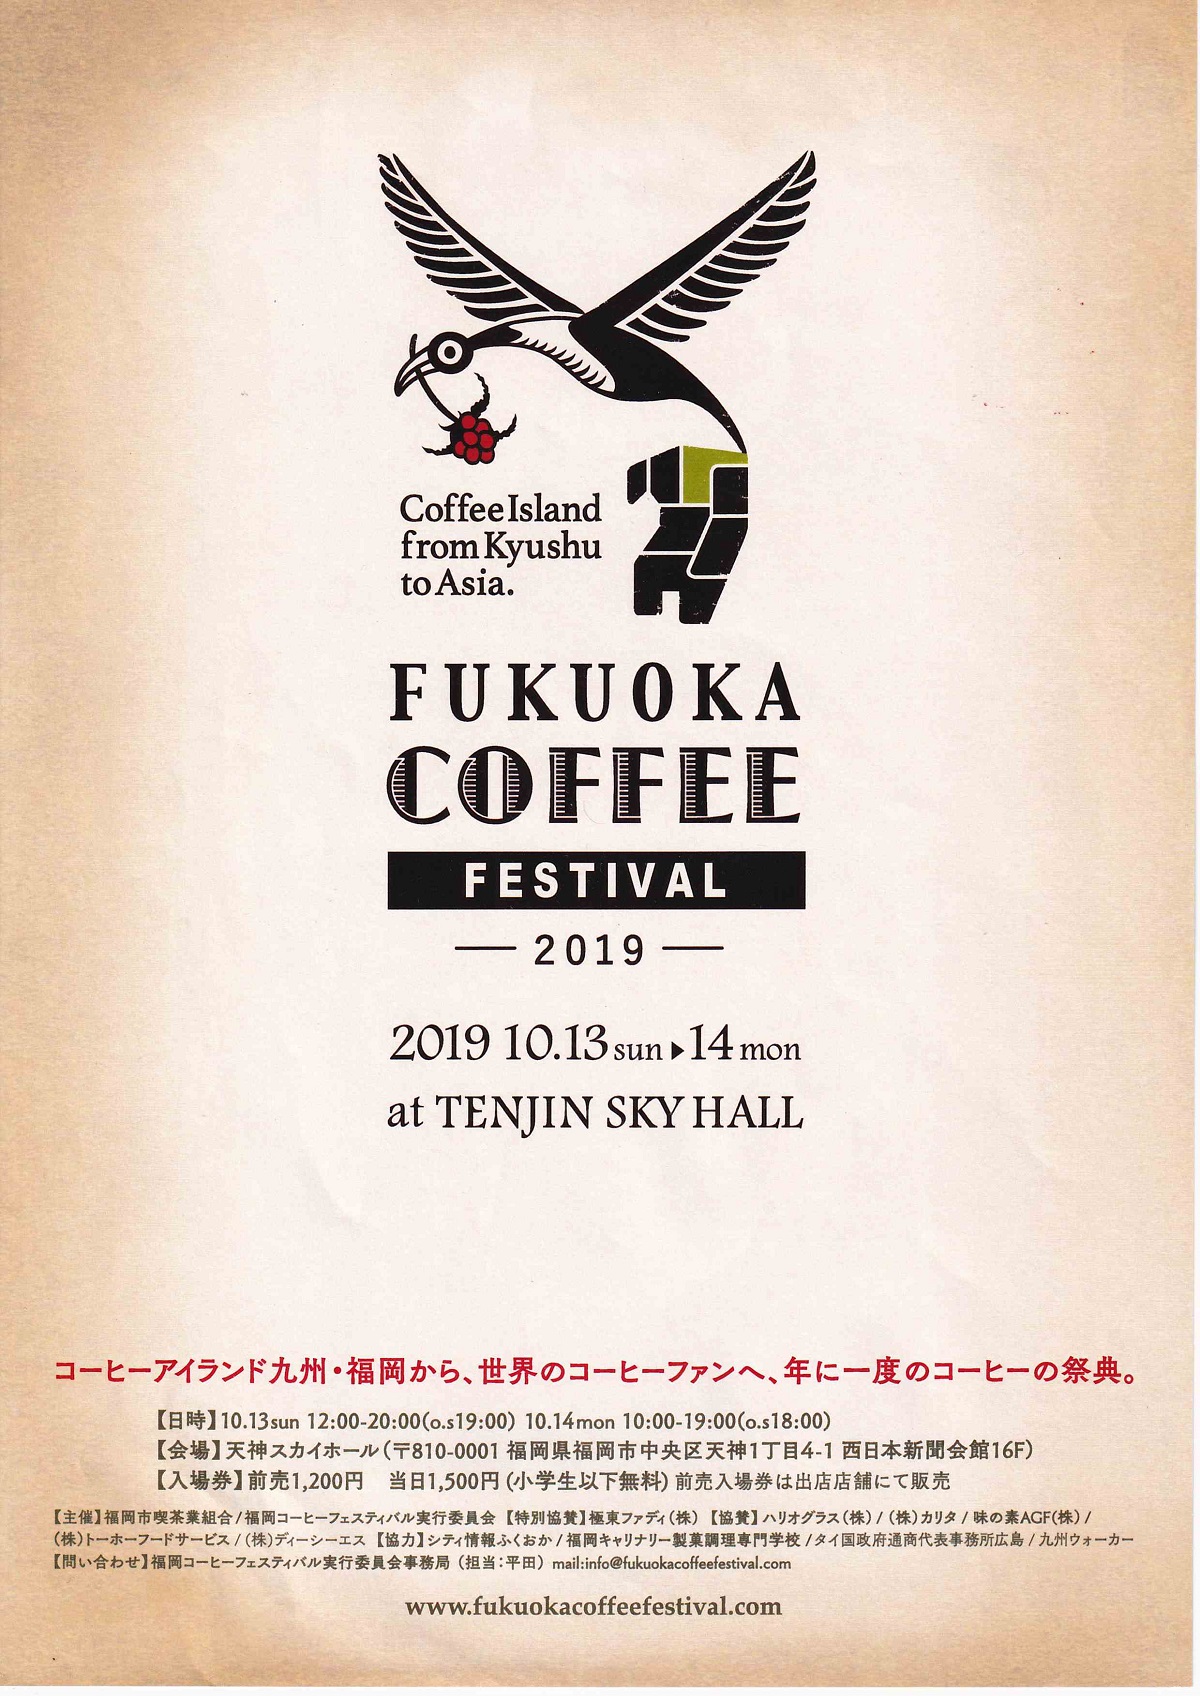 FUKUOKA COFFEE FESTIVAL 2019